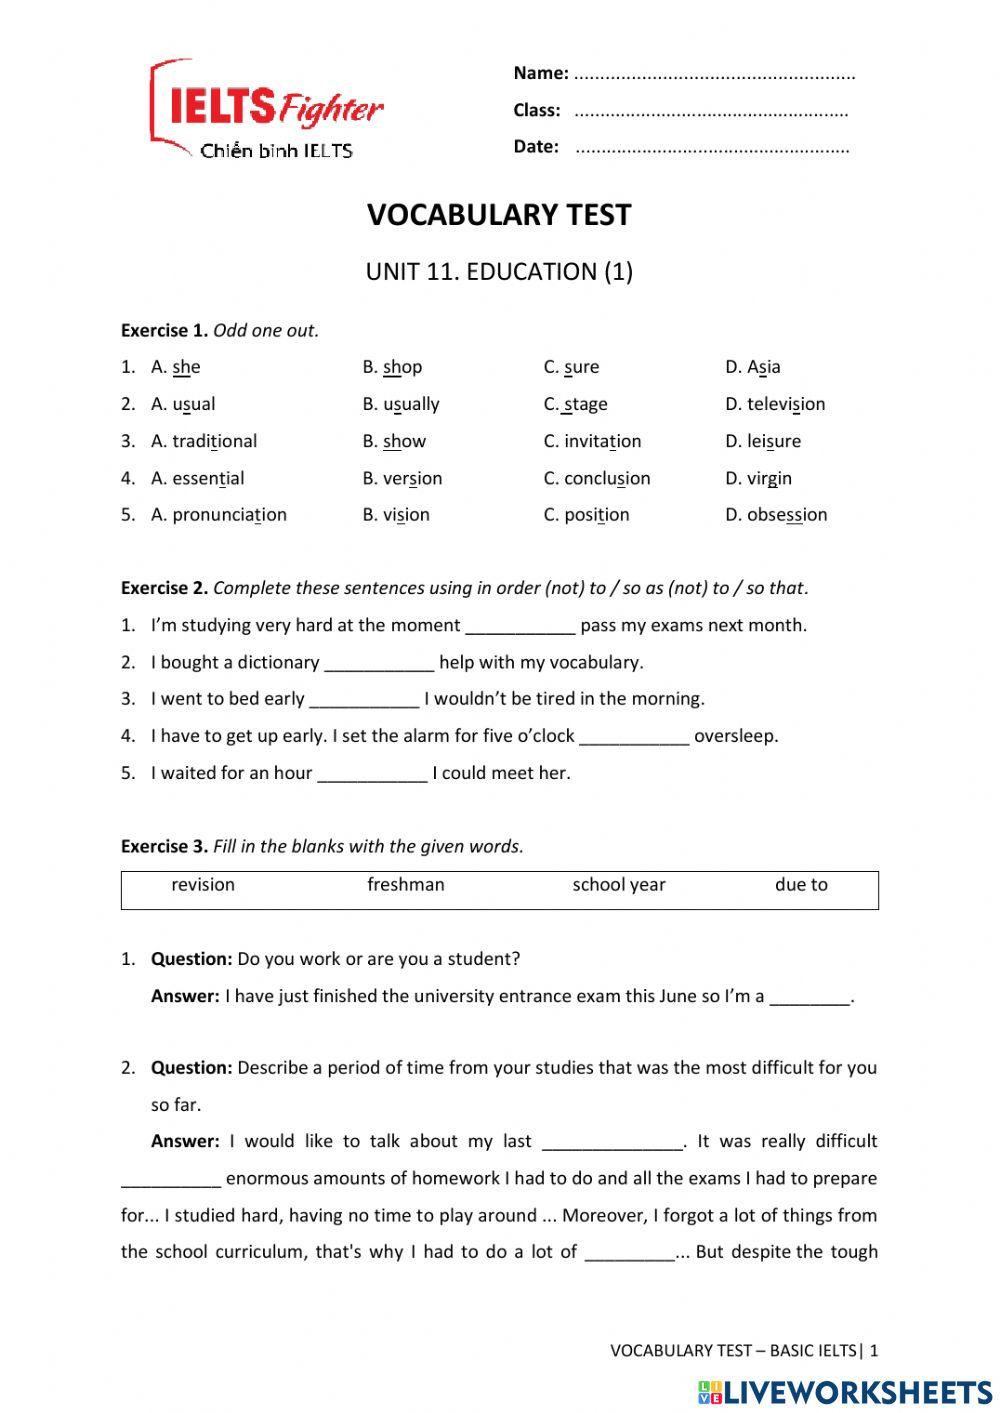 Vocab Test U11-BASIC IELTS